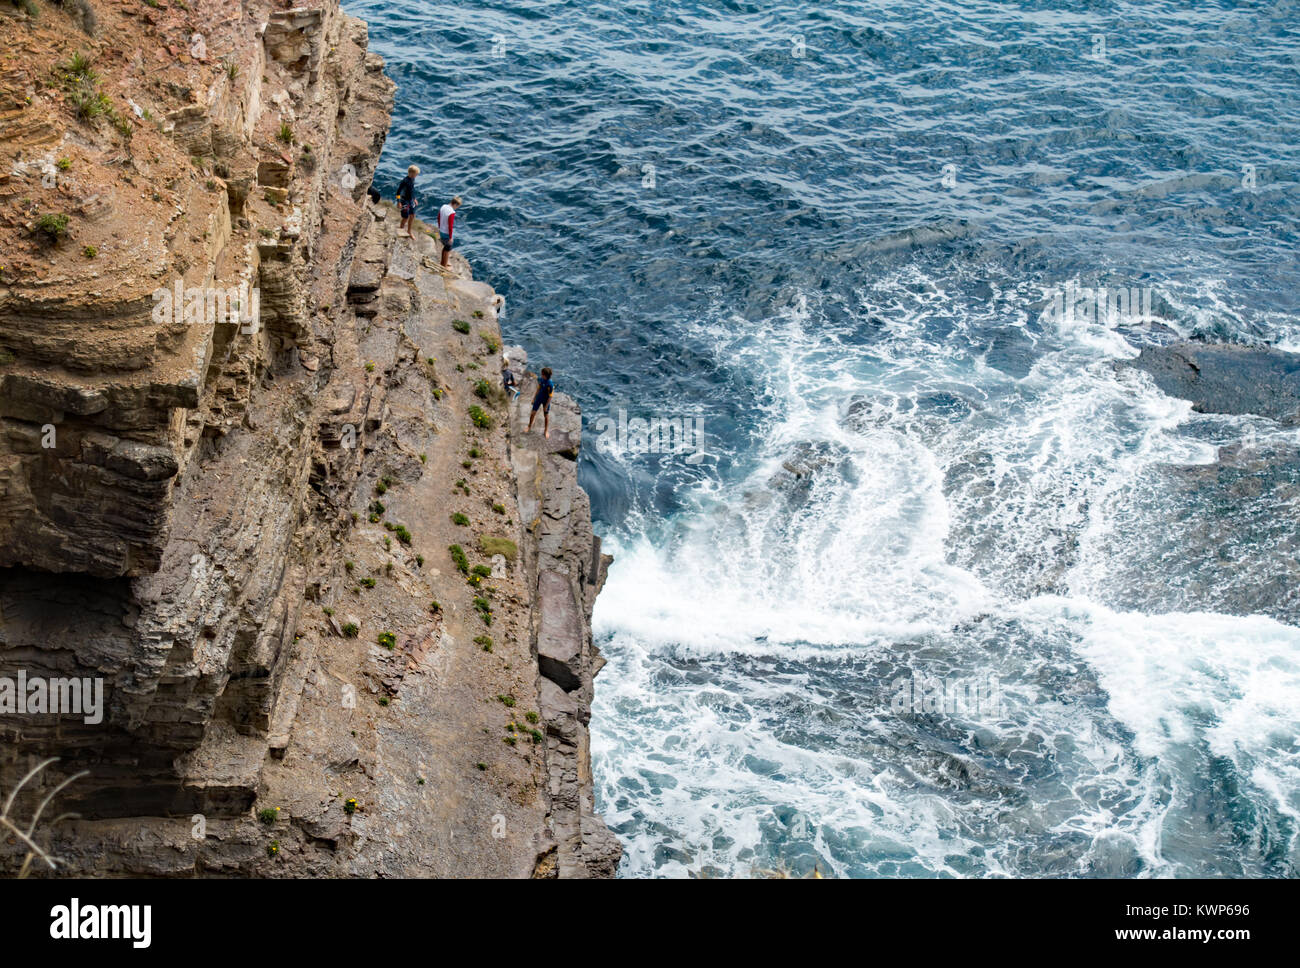 5 Boys climbing a Turimetta Headland cliff with waves crashing onto rocks below. Stock Photo